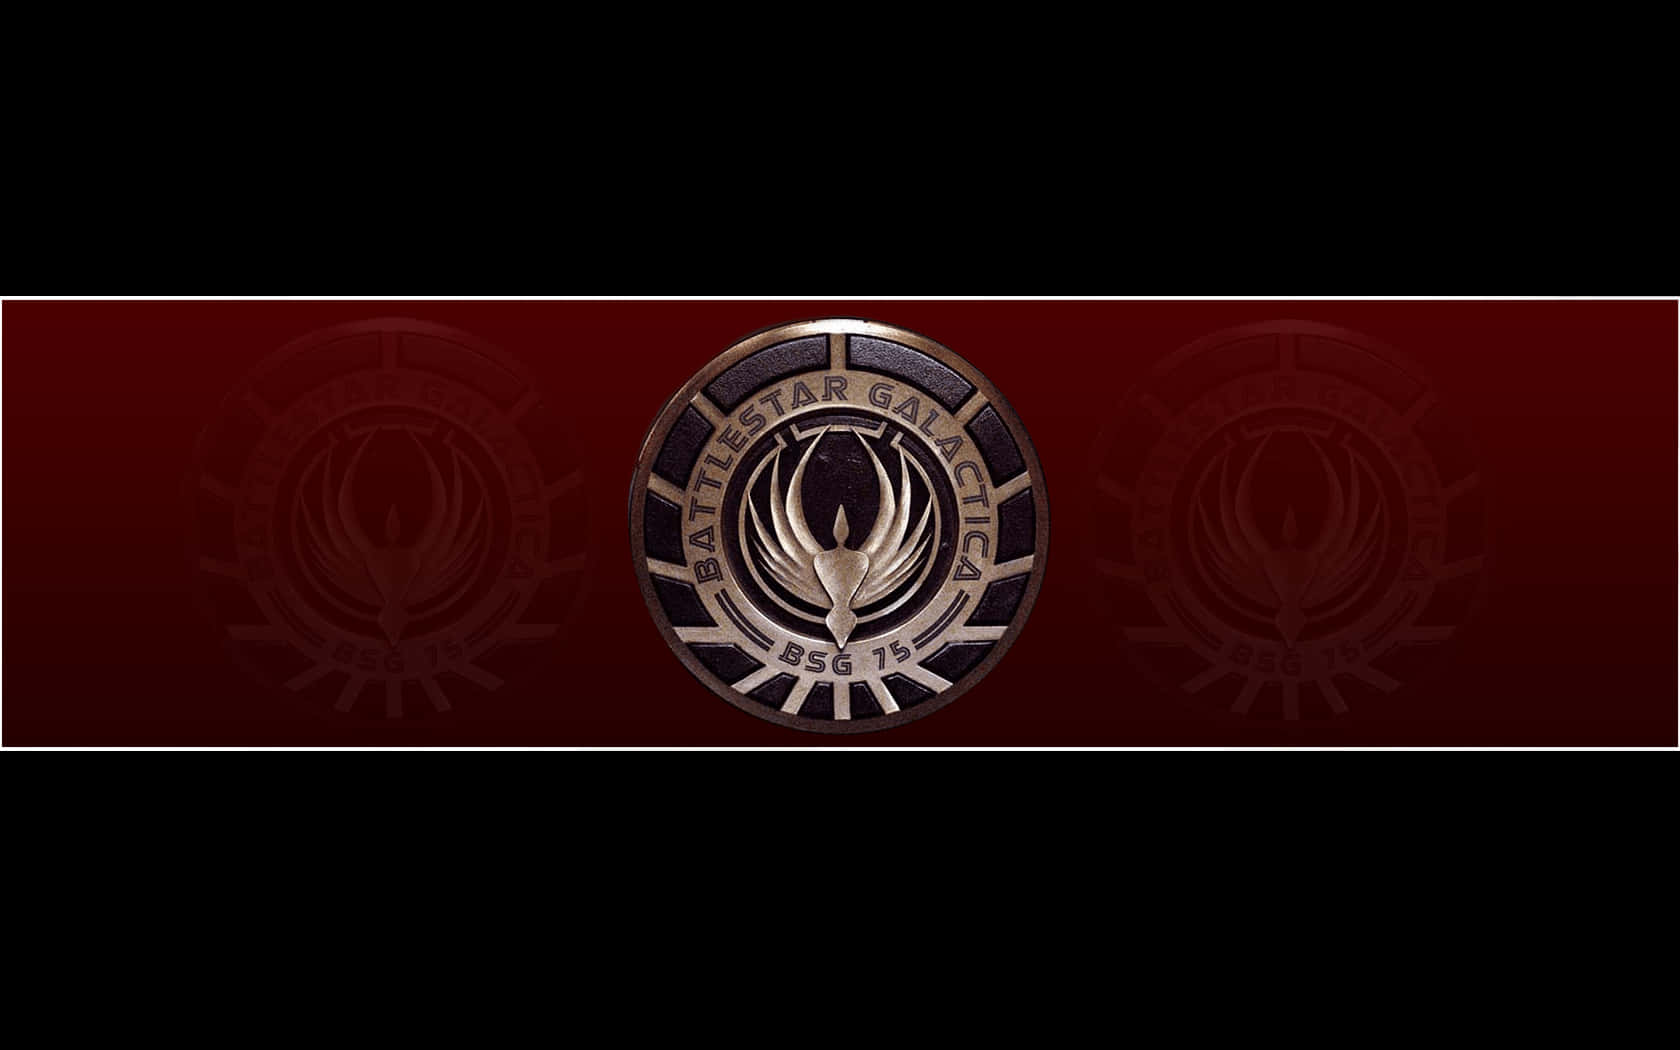 Battlestar Galactica Emblem Red And Black Wallpaper